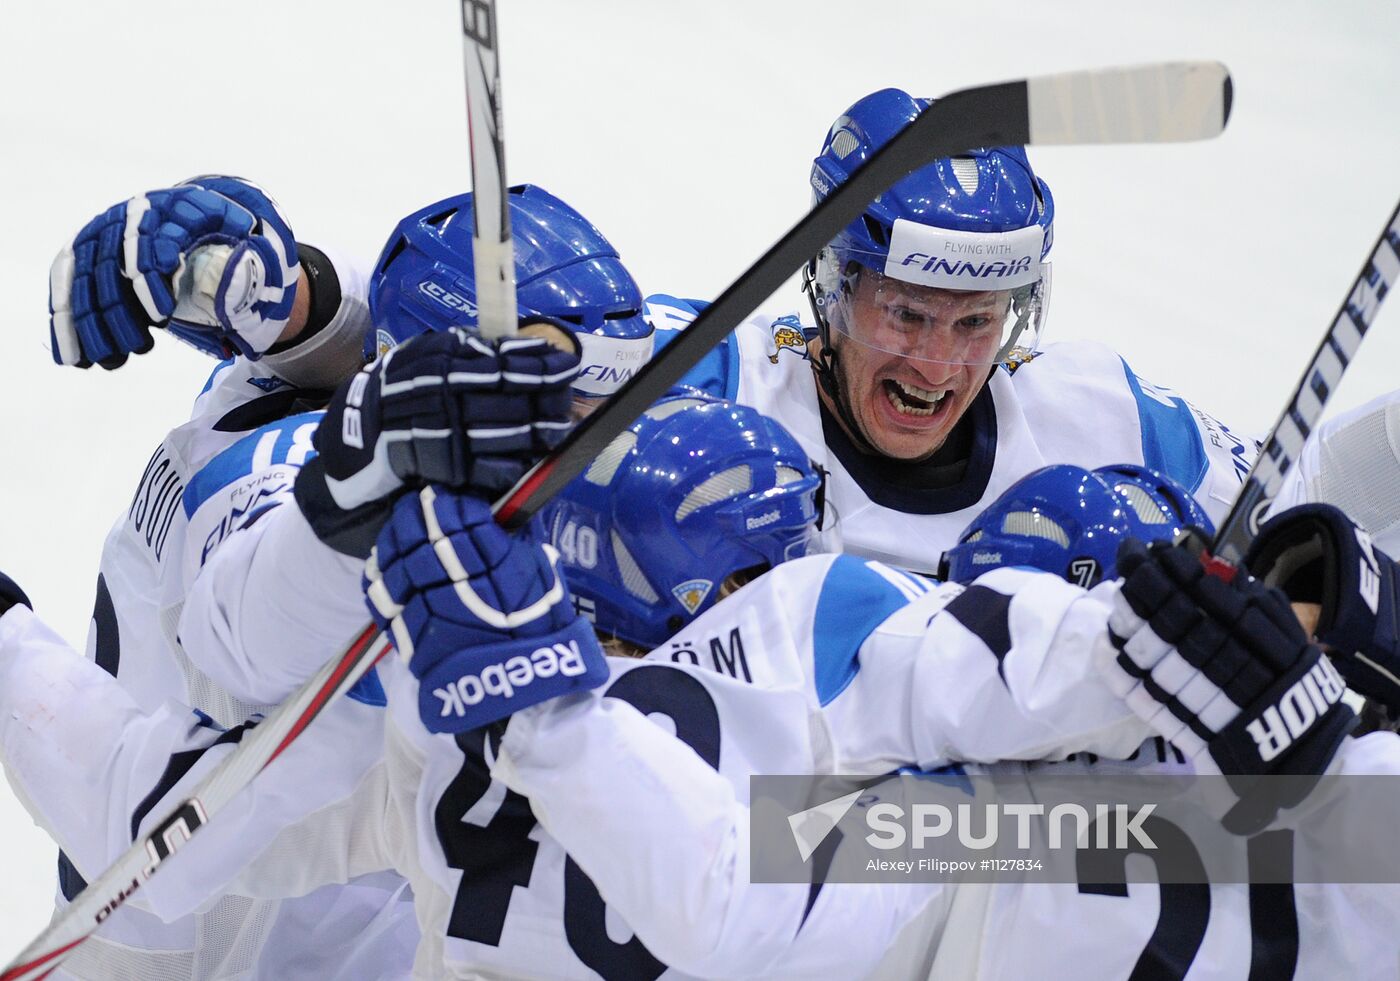 2012 World Ice Hockey Championships. Finland vs. Russia